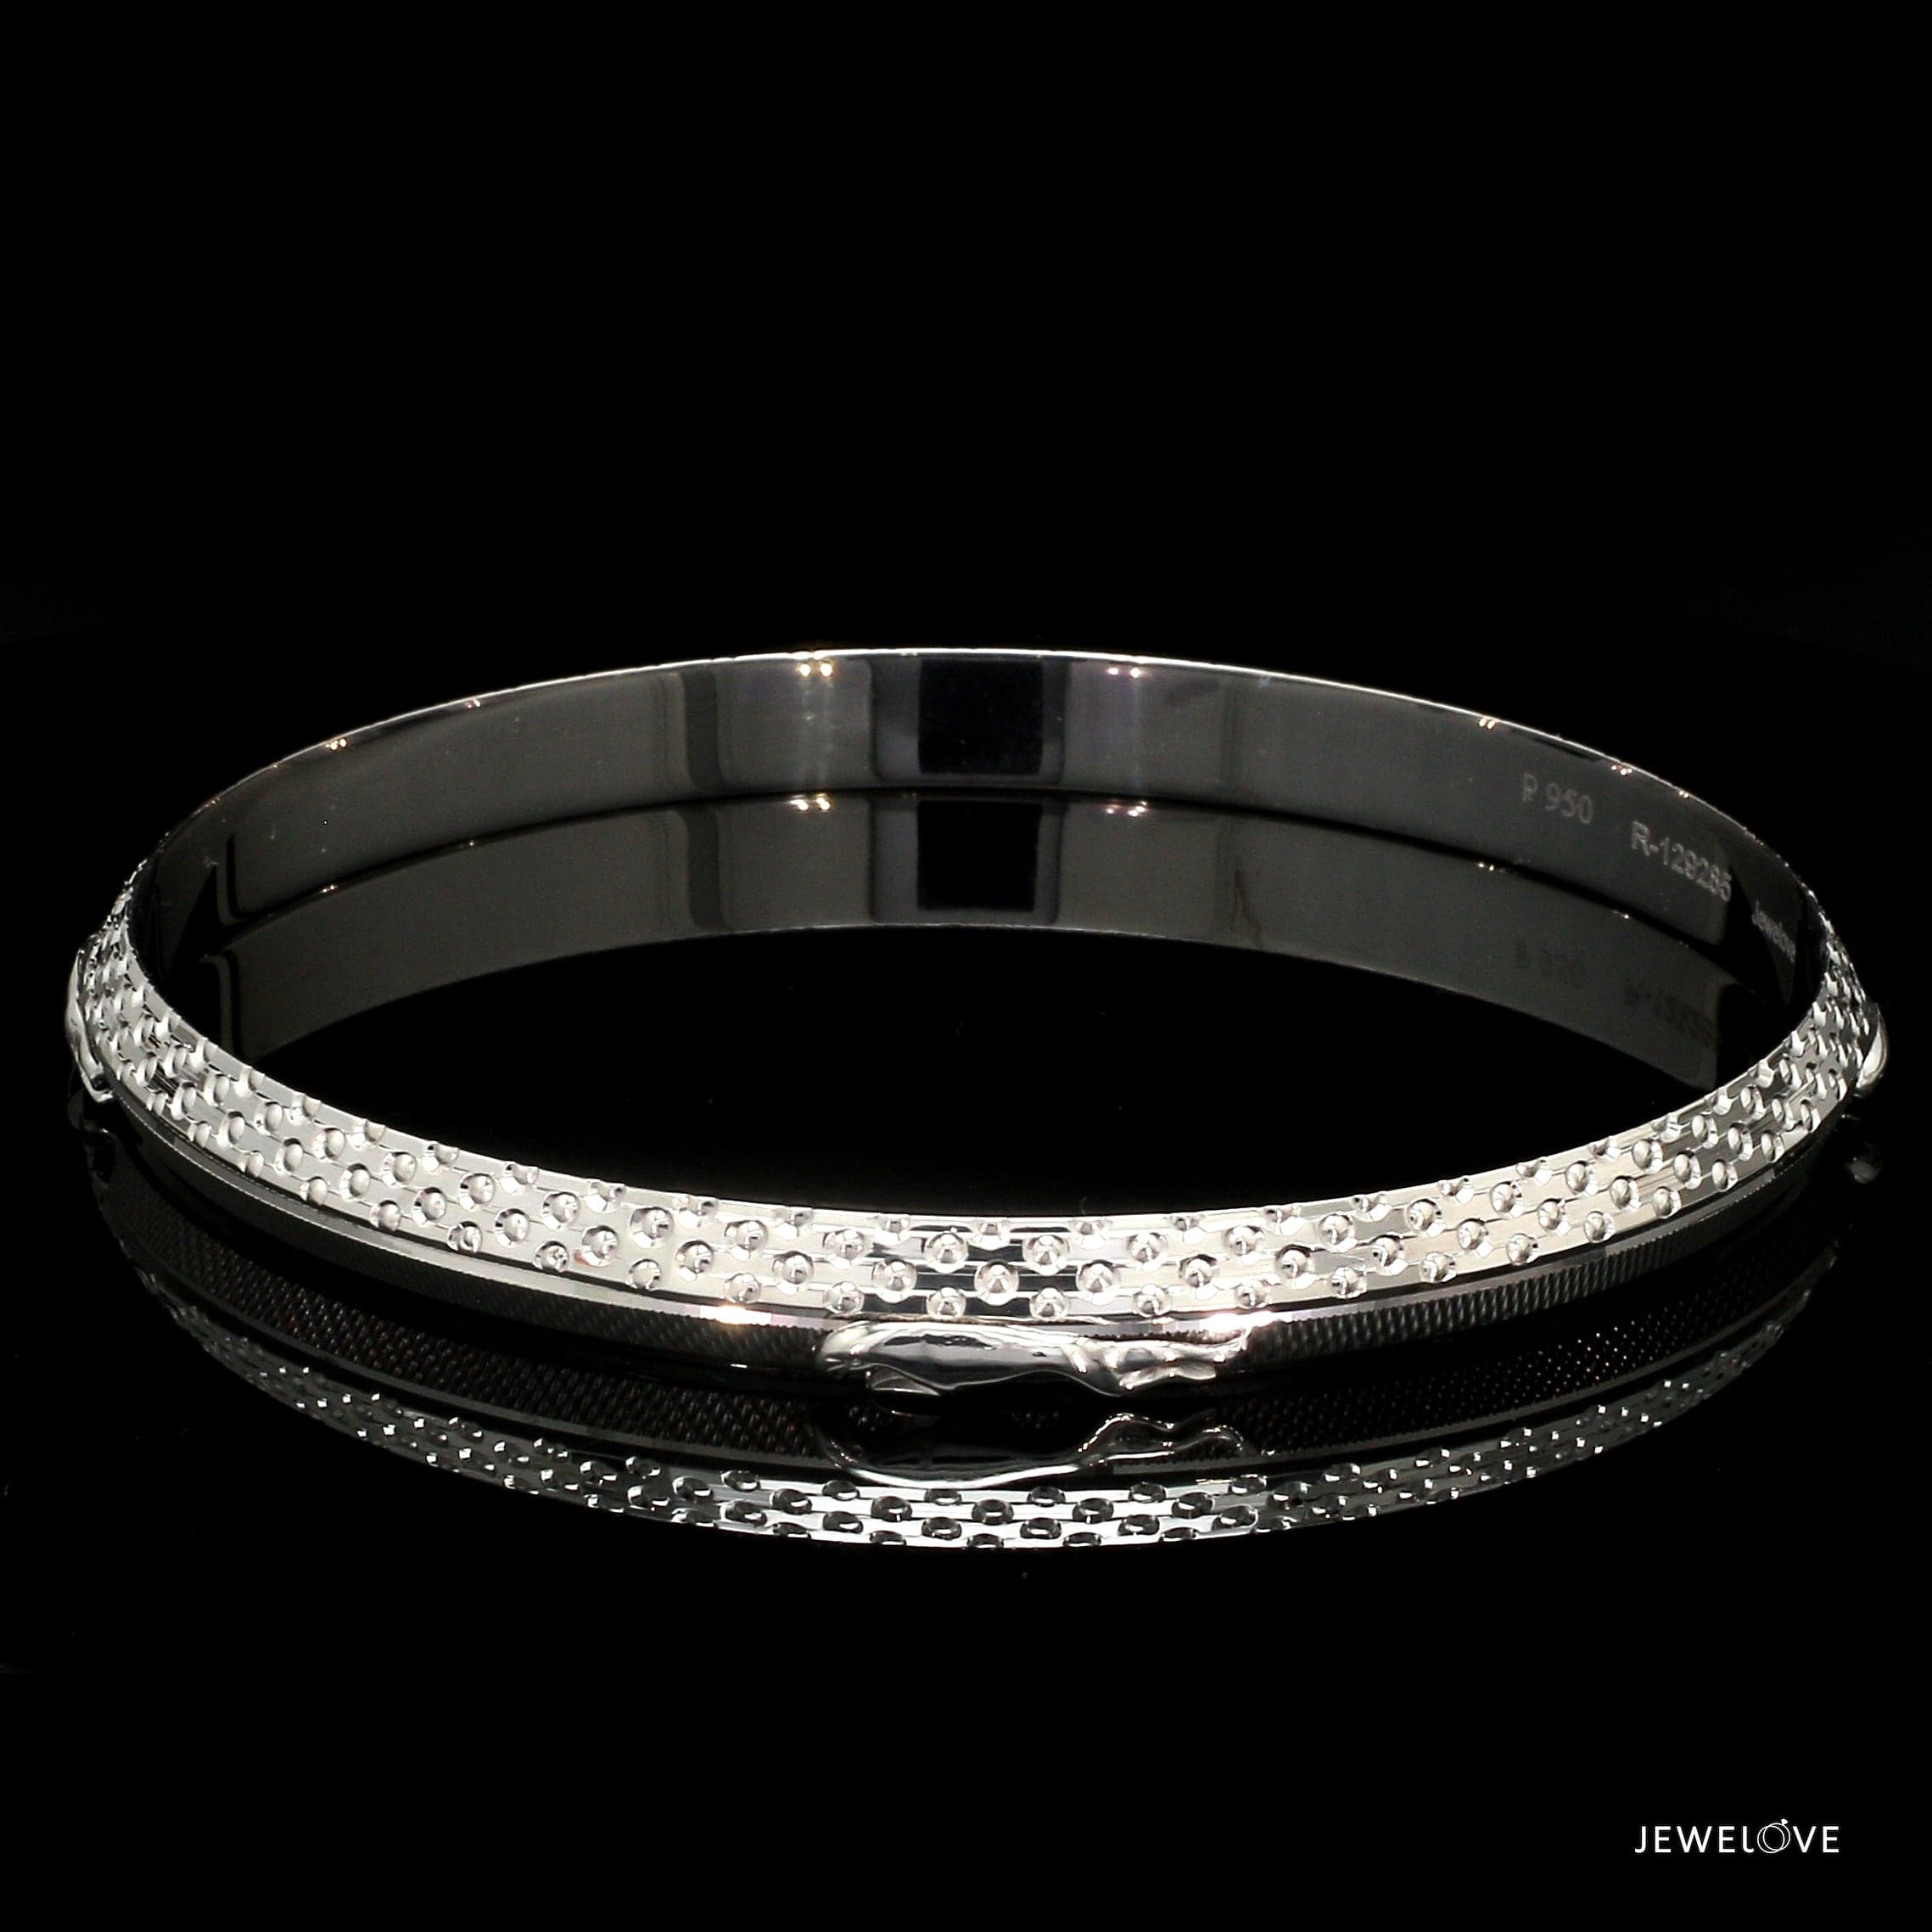 Buy BOLDIFUL Rose Gold Jaguar Silver Bracelet For Women, 925 Sterling  Silver Girls Bracelet For Gift. at Amazon.in